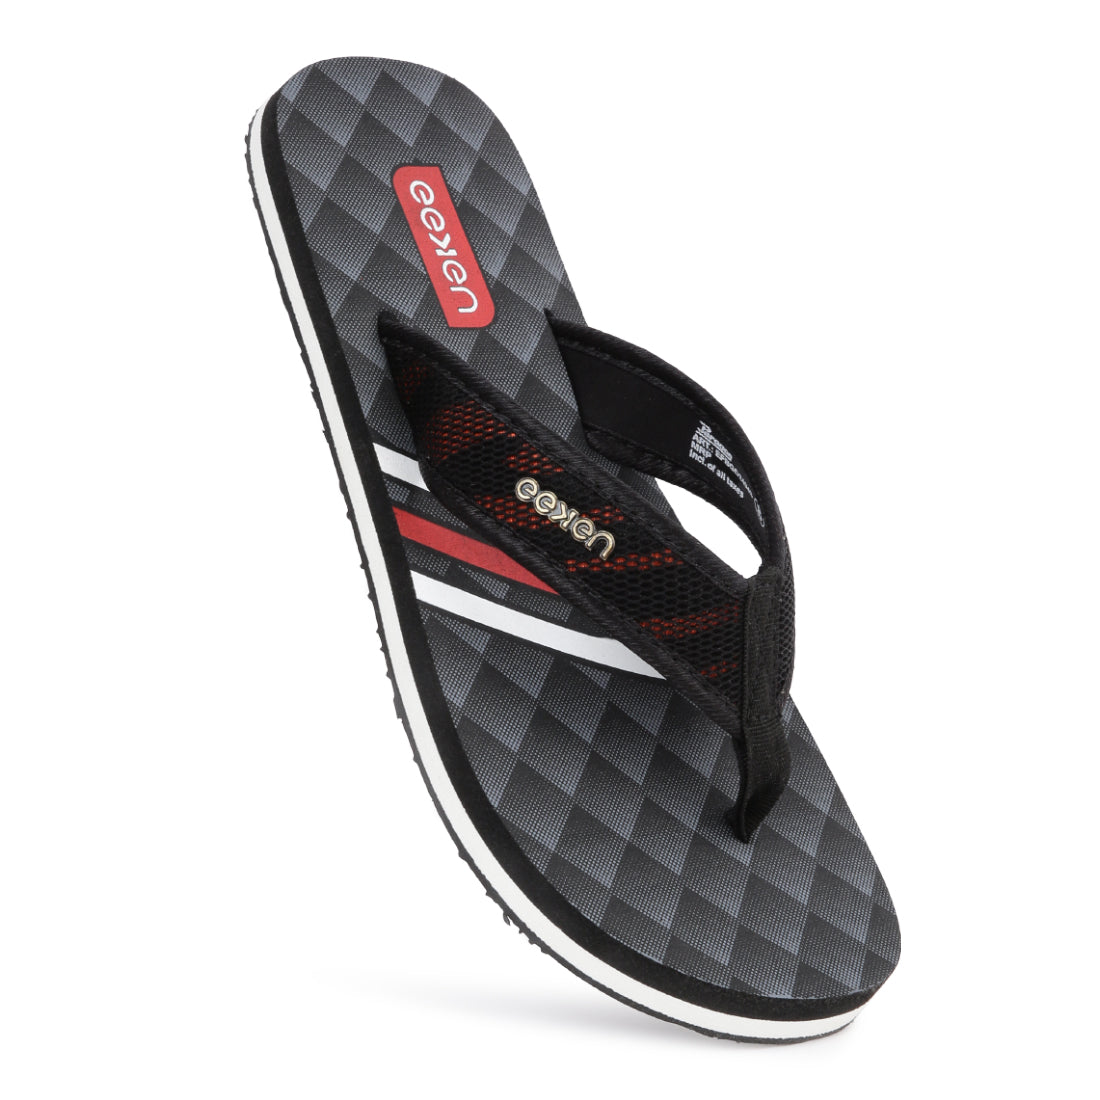 Eeken EFBGO2404S Black Lightweight Washable Dailywear Durable Flip Flops For Men